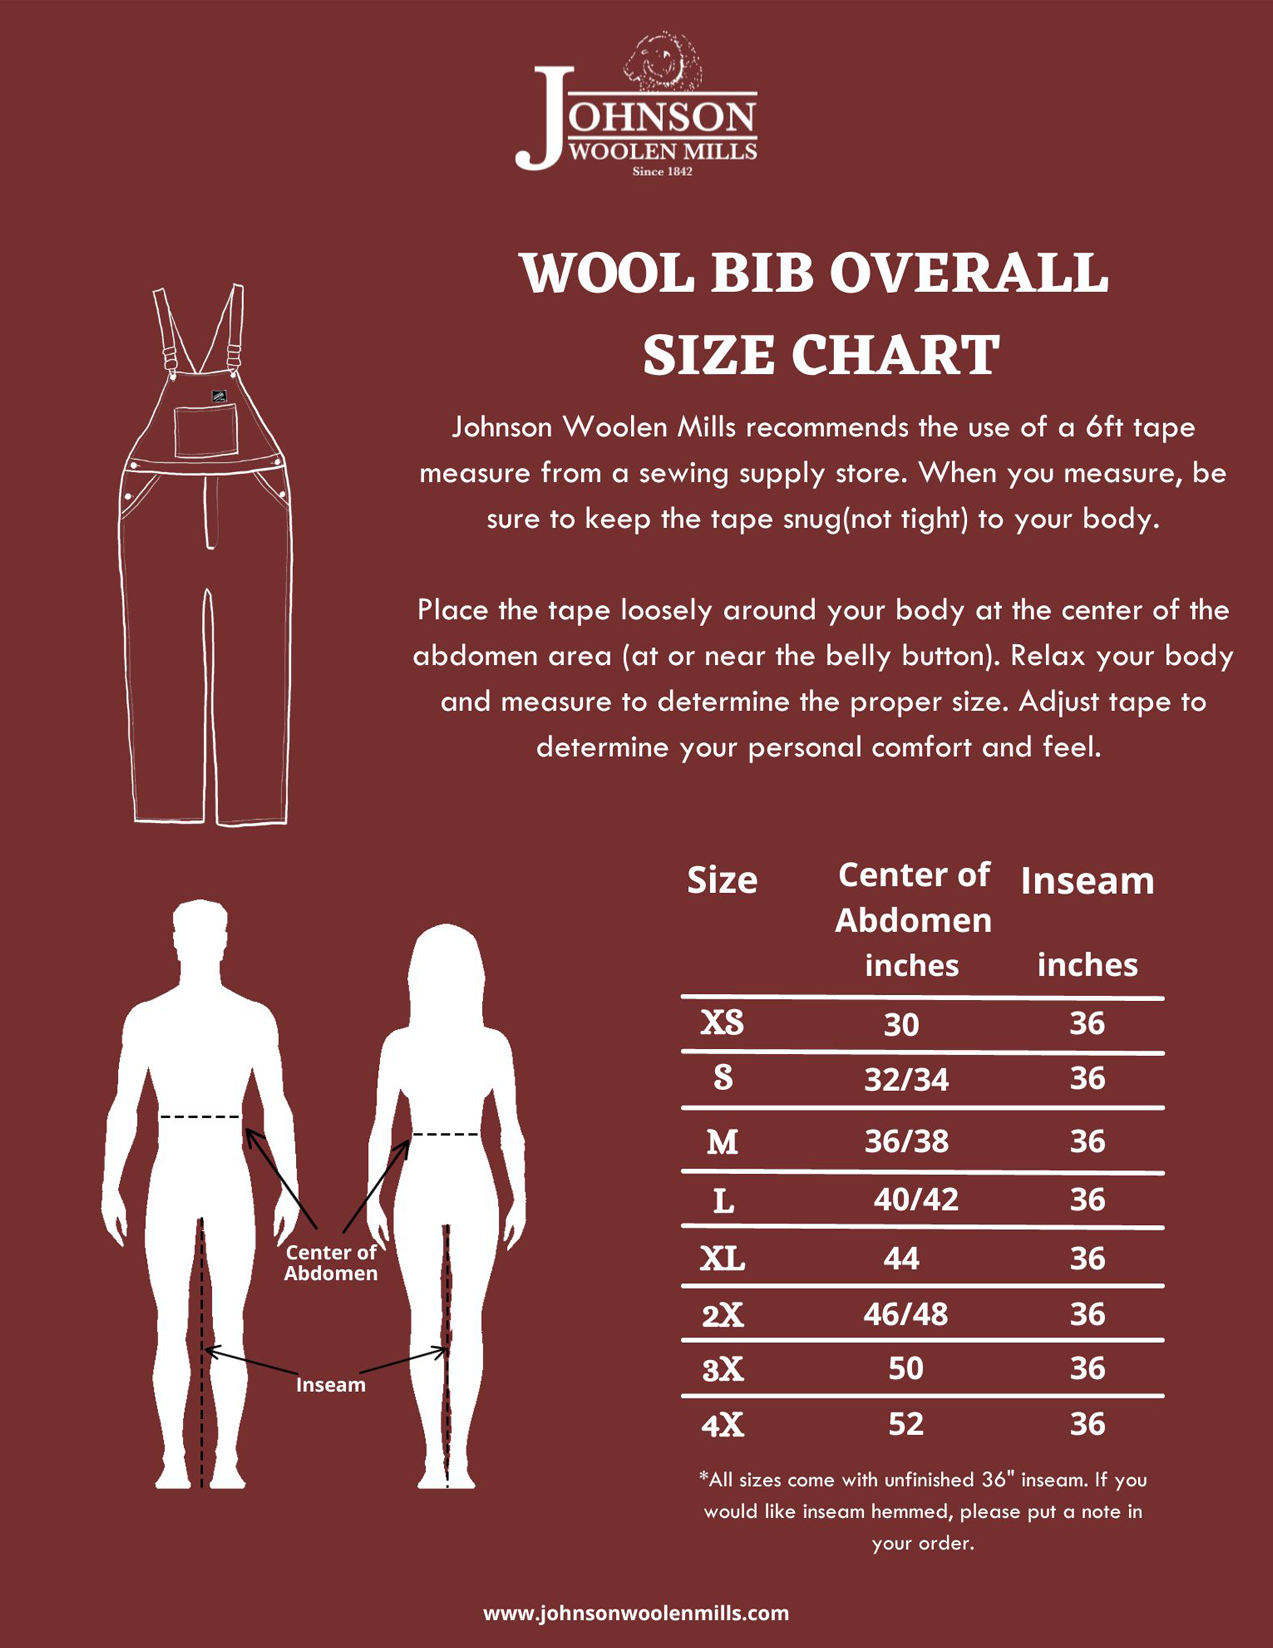 Johnson Woolen Mills Wool bib overall size chart for Men and Women